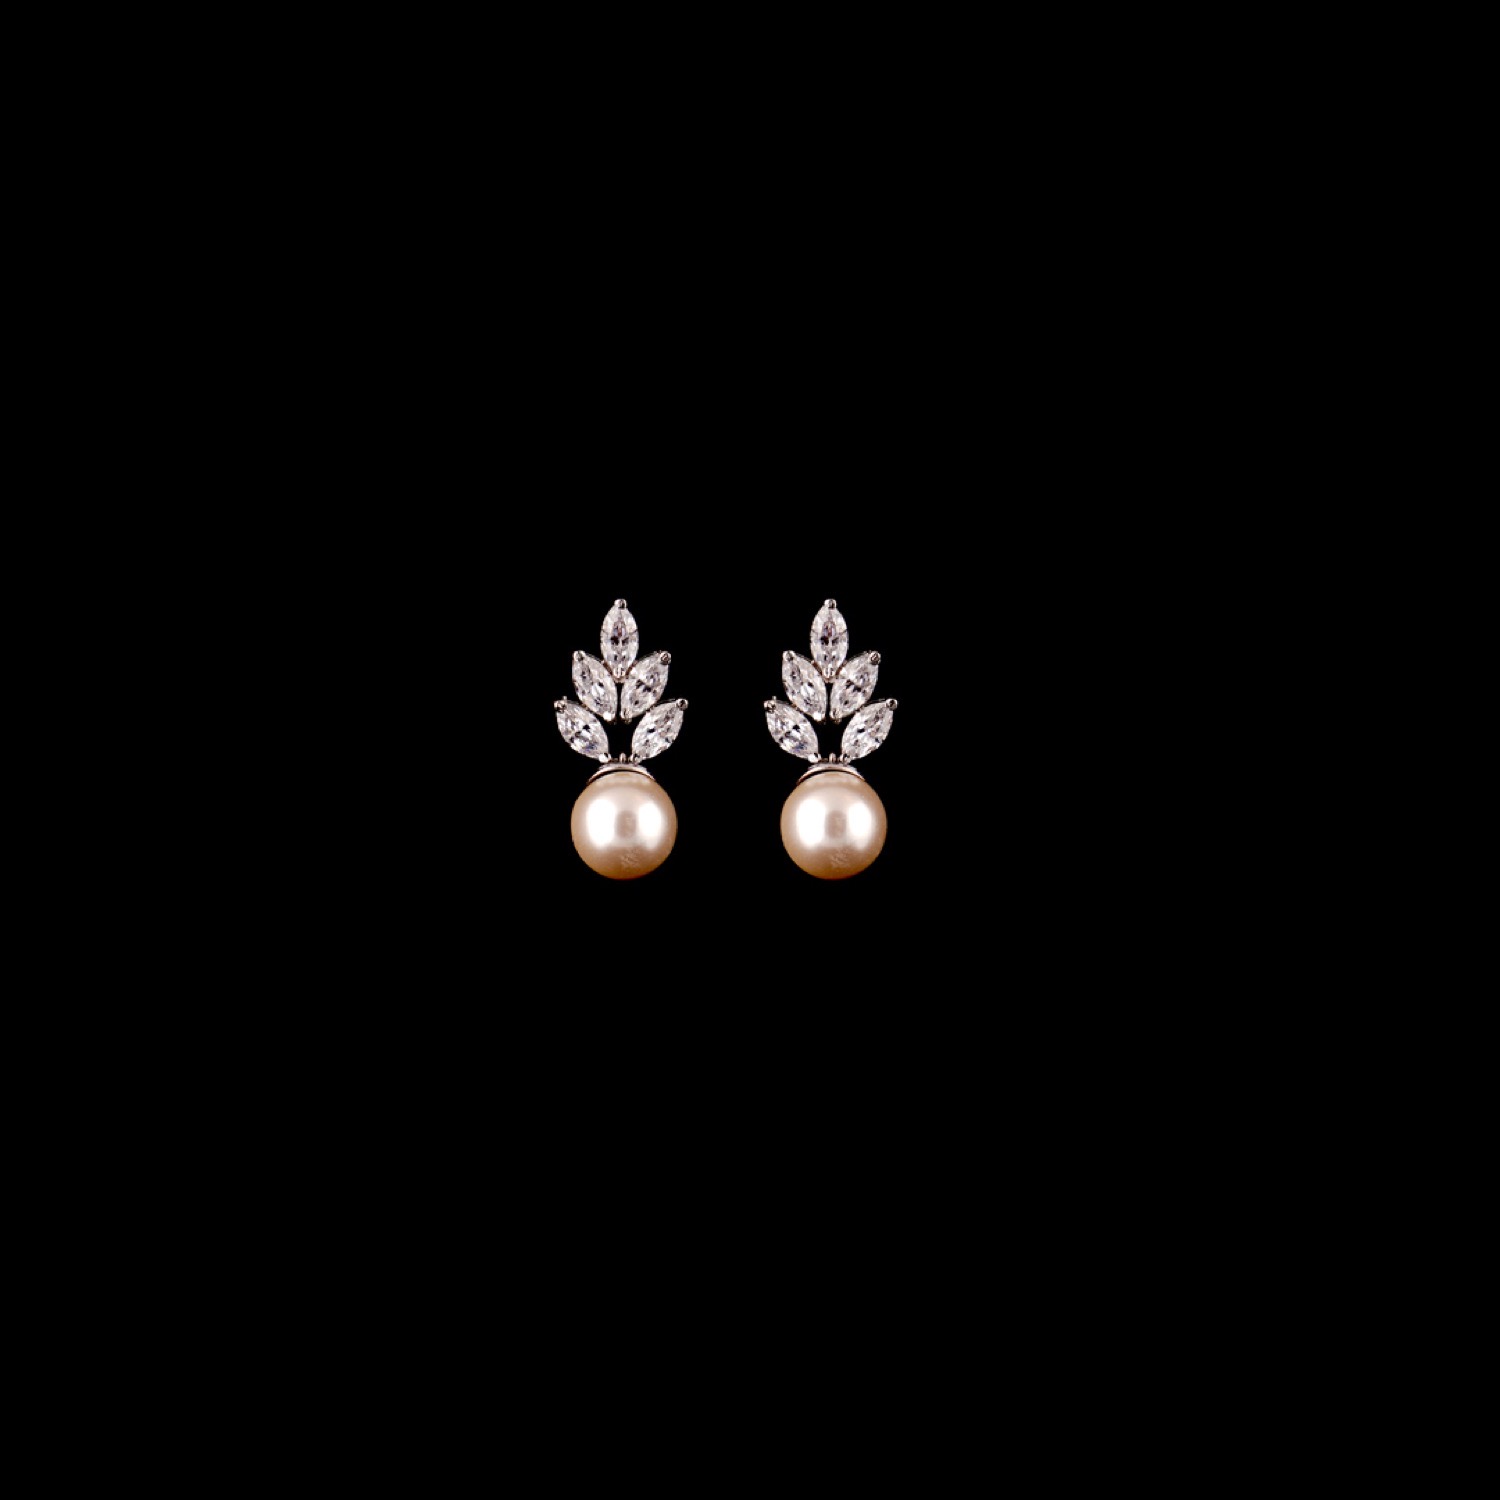 varam_earrings_102022_marquise_cut_stone_with_pearl_droping_silver_earrings-1